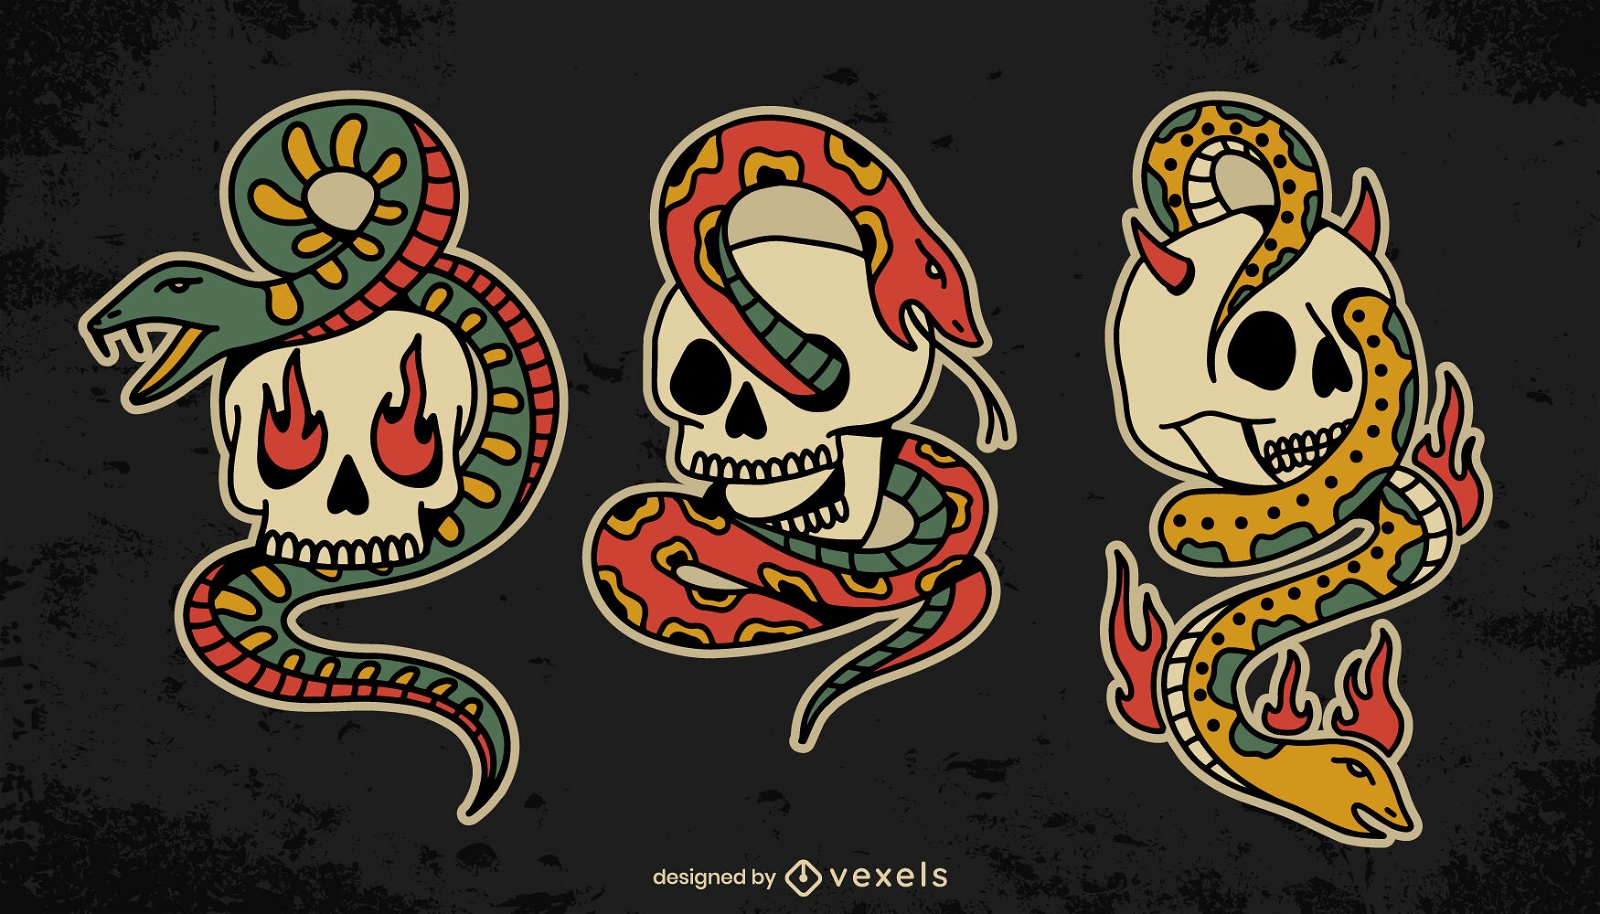 Skulls and snakes tattoo elements set